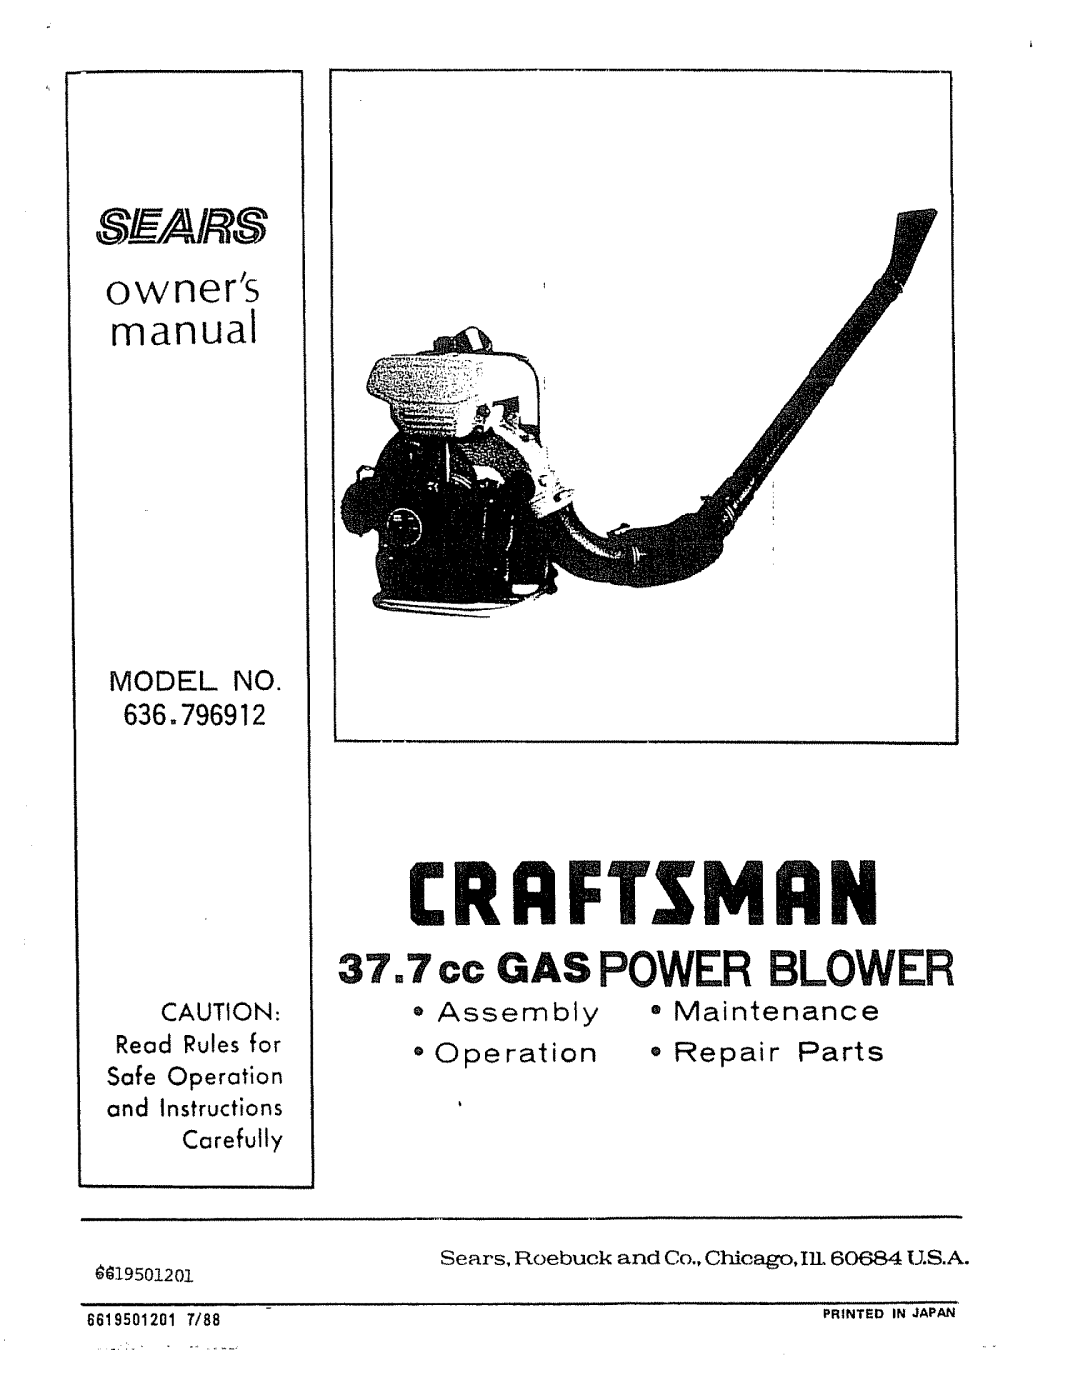 Craftsman 636.796912 owner manual Model No, CAUTtON, Read Rules for, Safe, Operation, Instructions, Carefully, I RRF$MRtl 